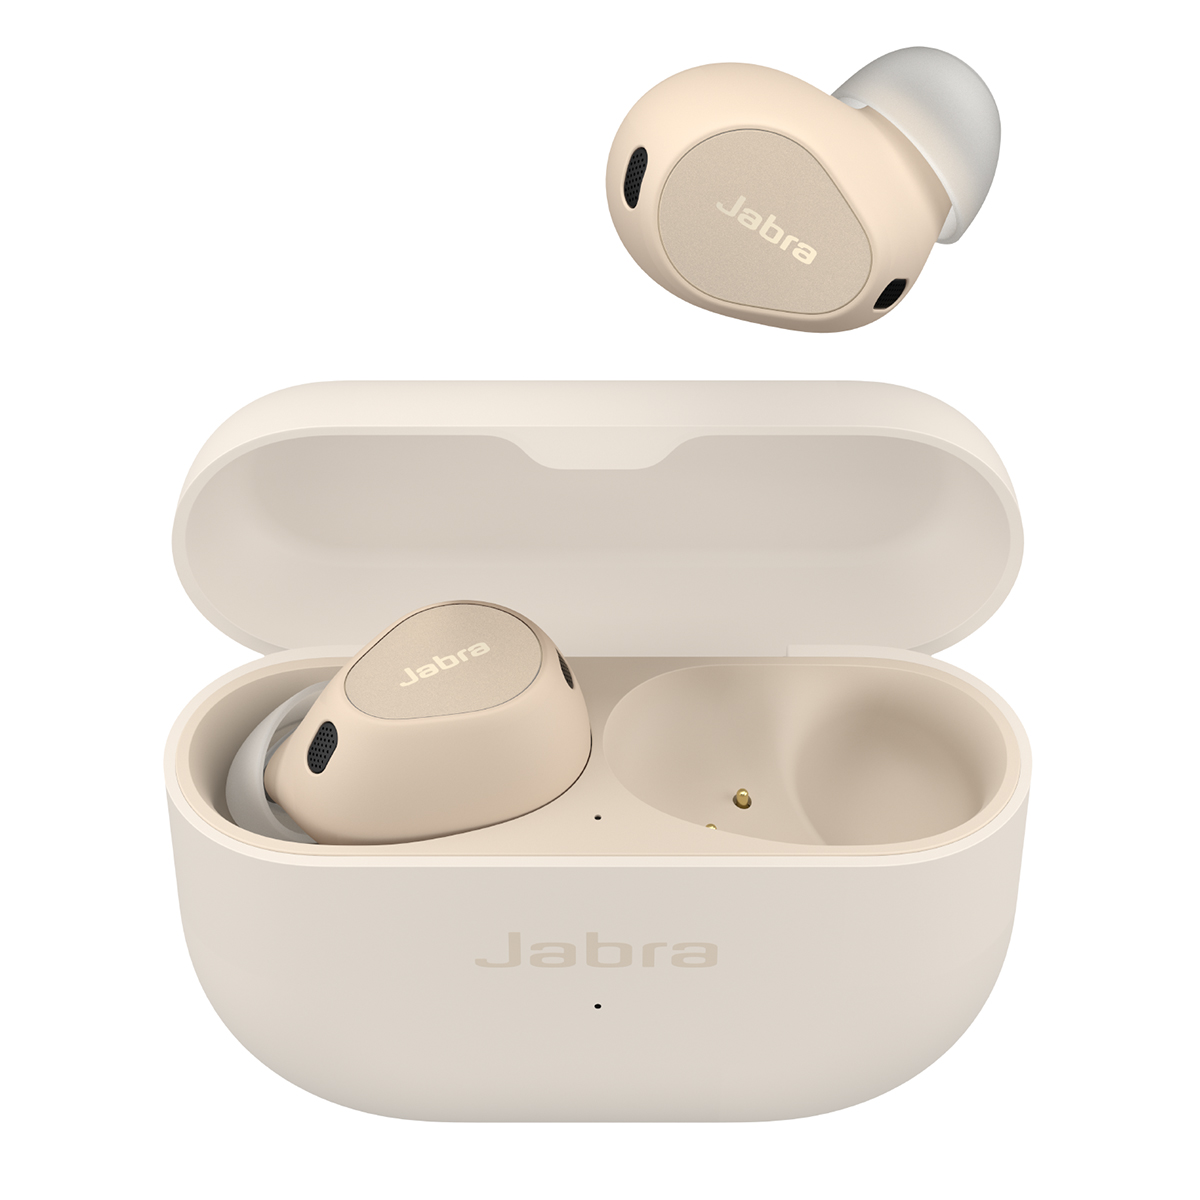 Jabra Elite 10 earbuds with case in cream render.